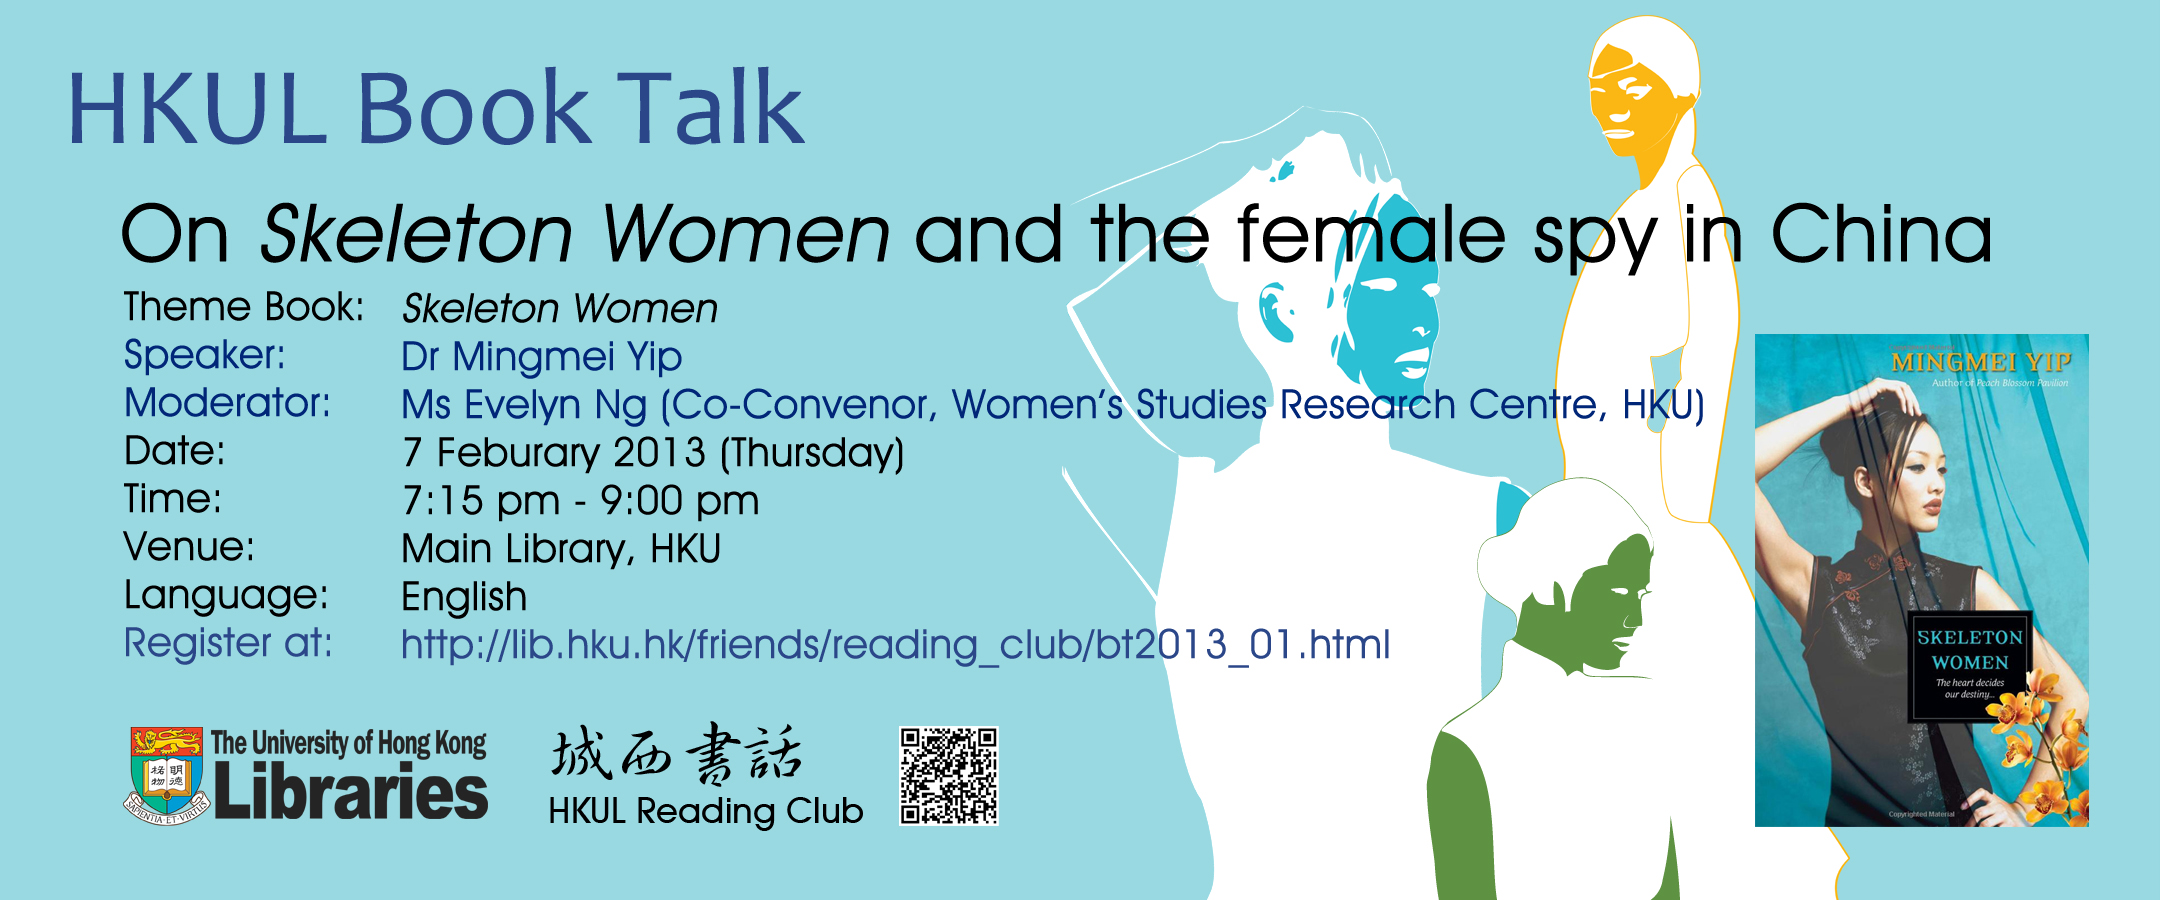 HKUL Book Talk: On 